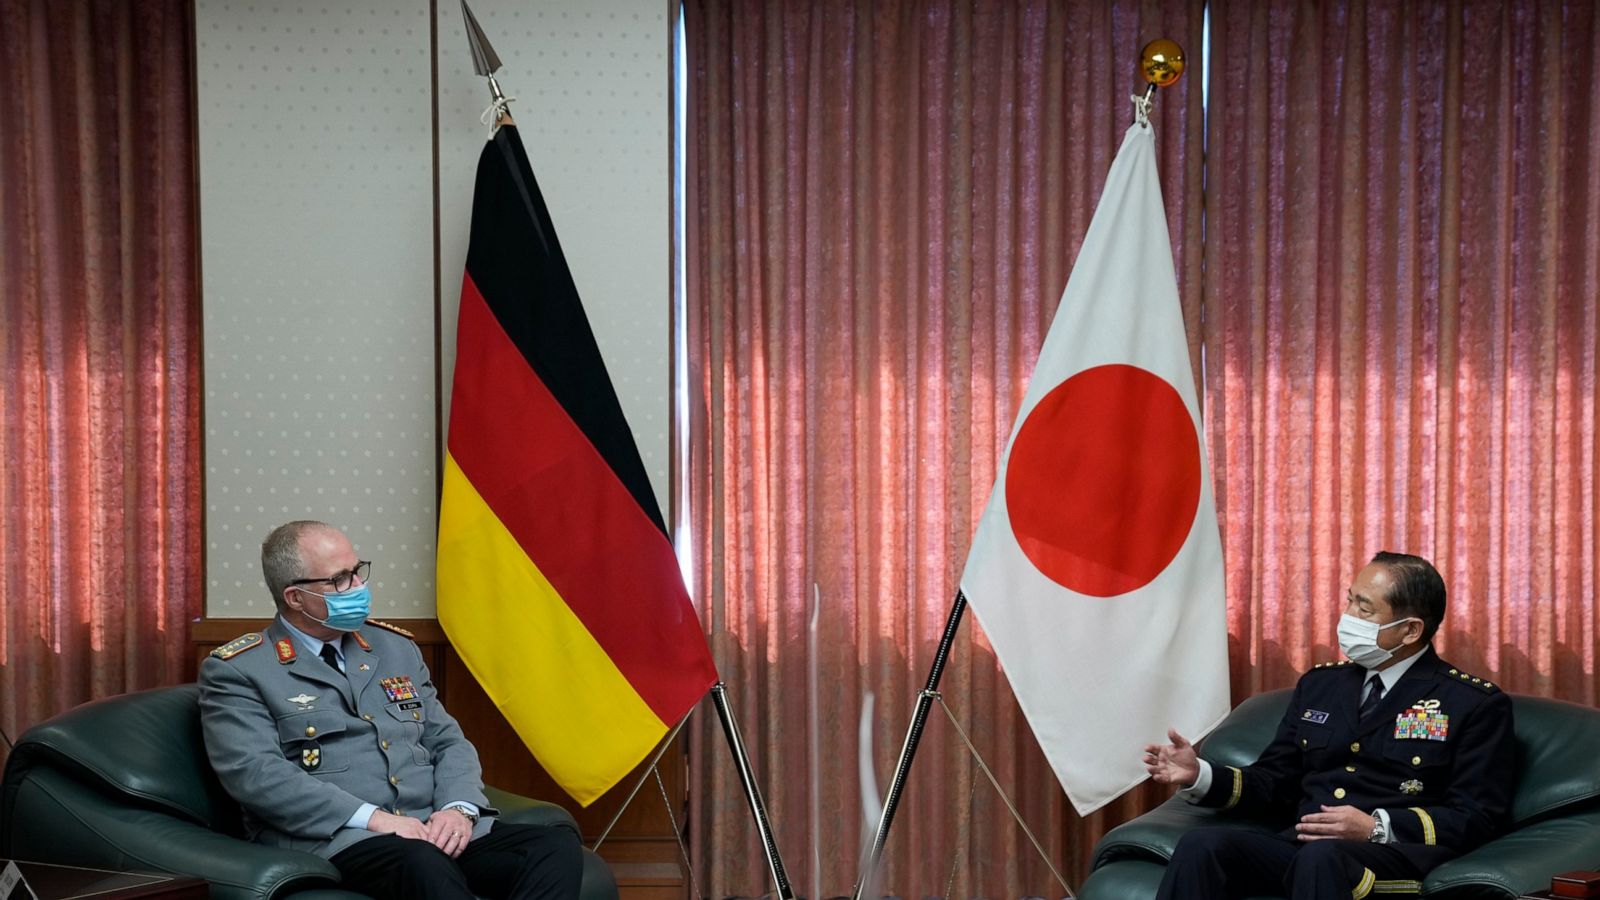 japan, germany expand military ties as german warship visits - abc news